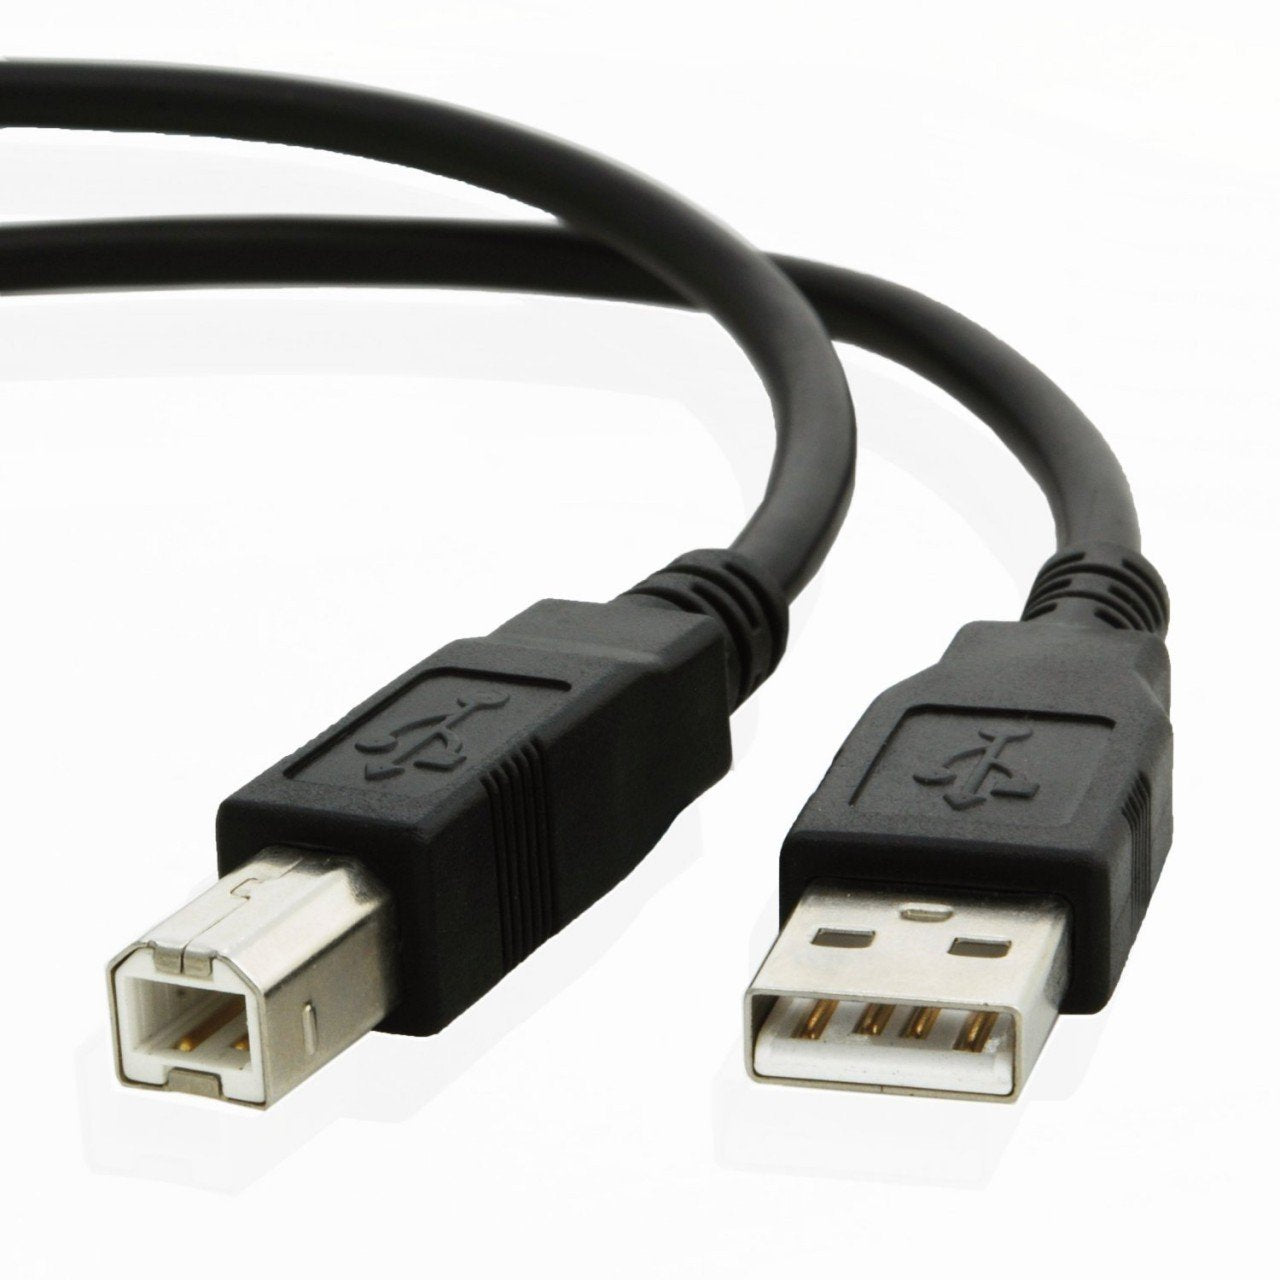 USB cable for Canon PIXMA MX375